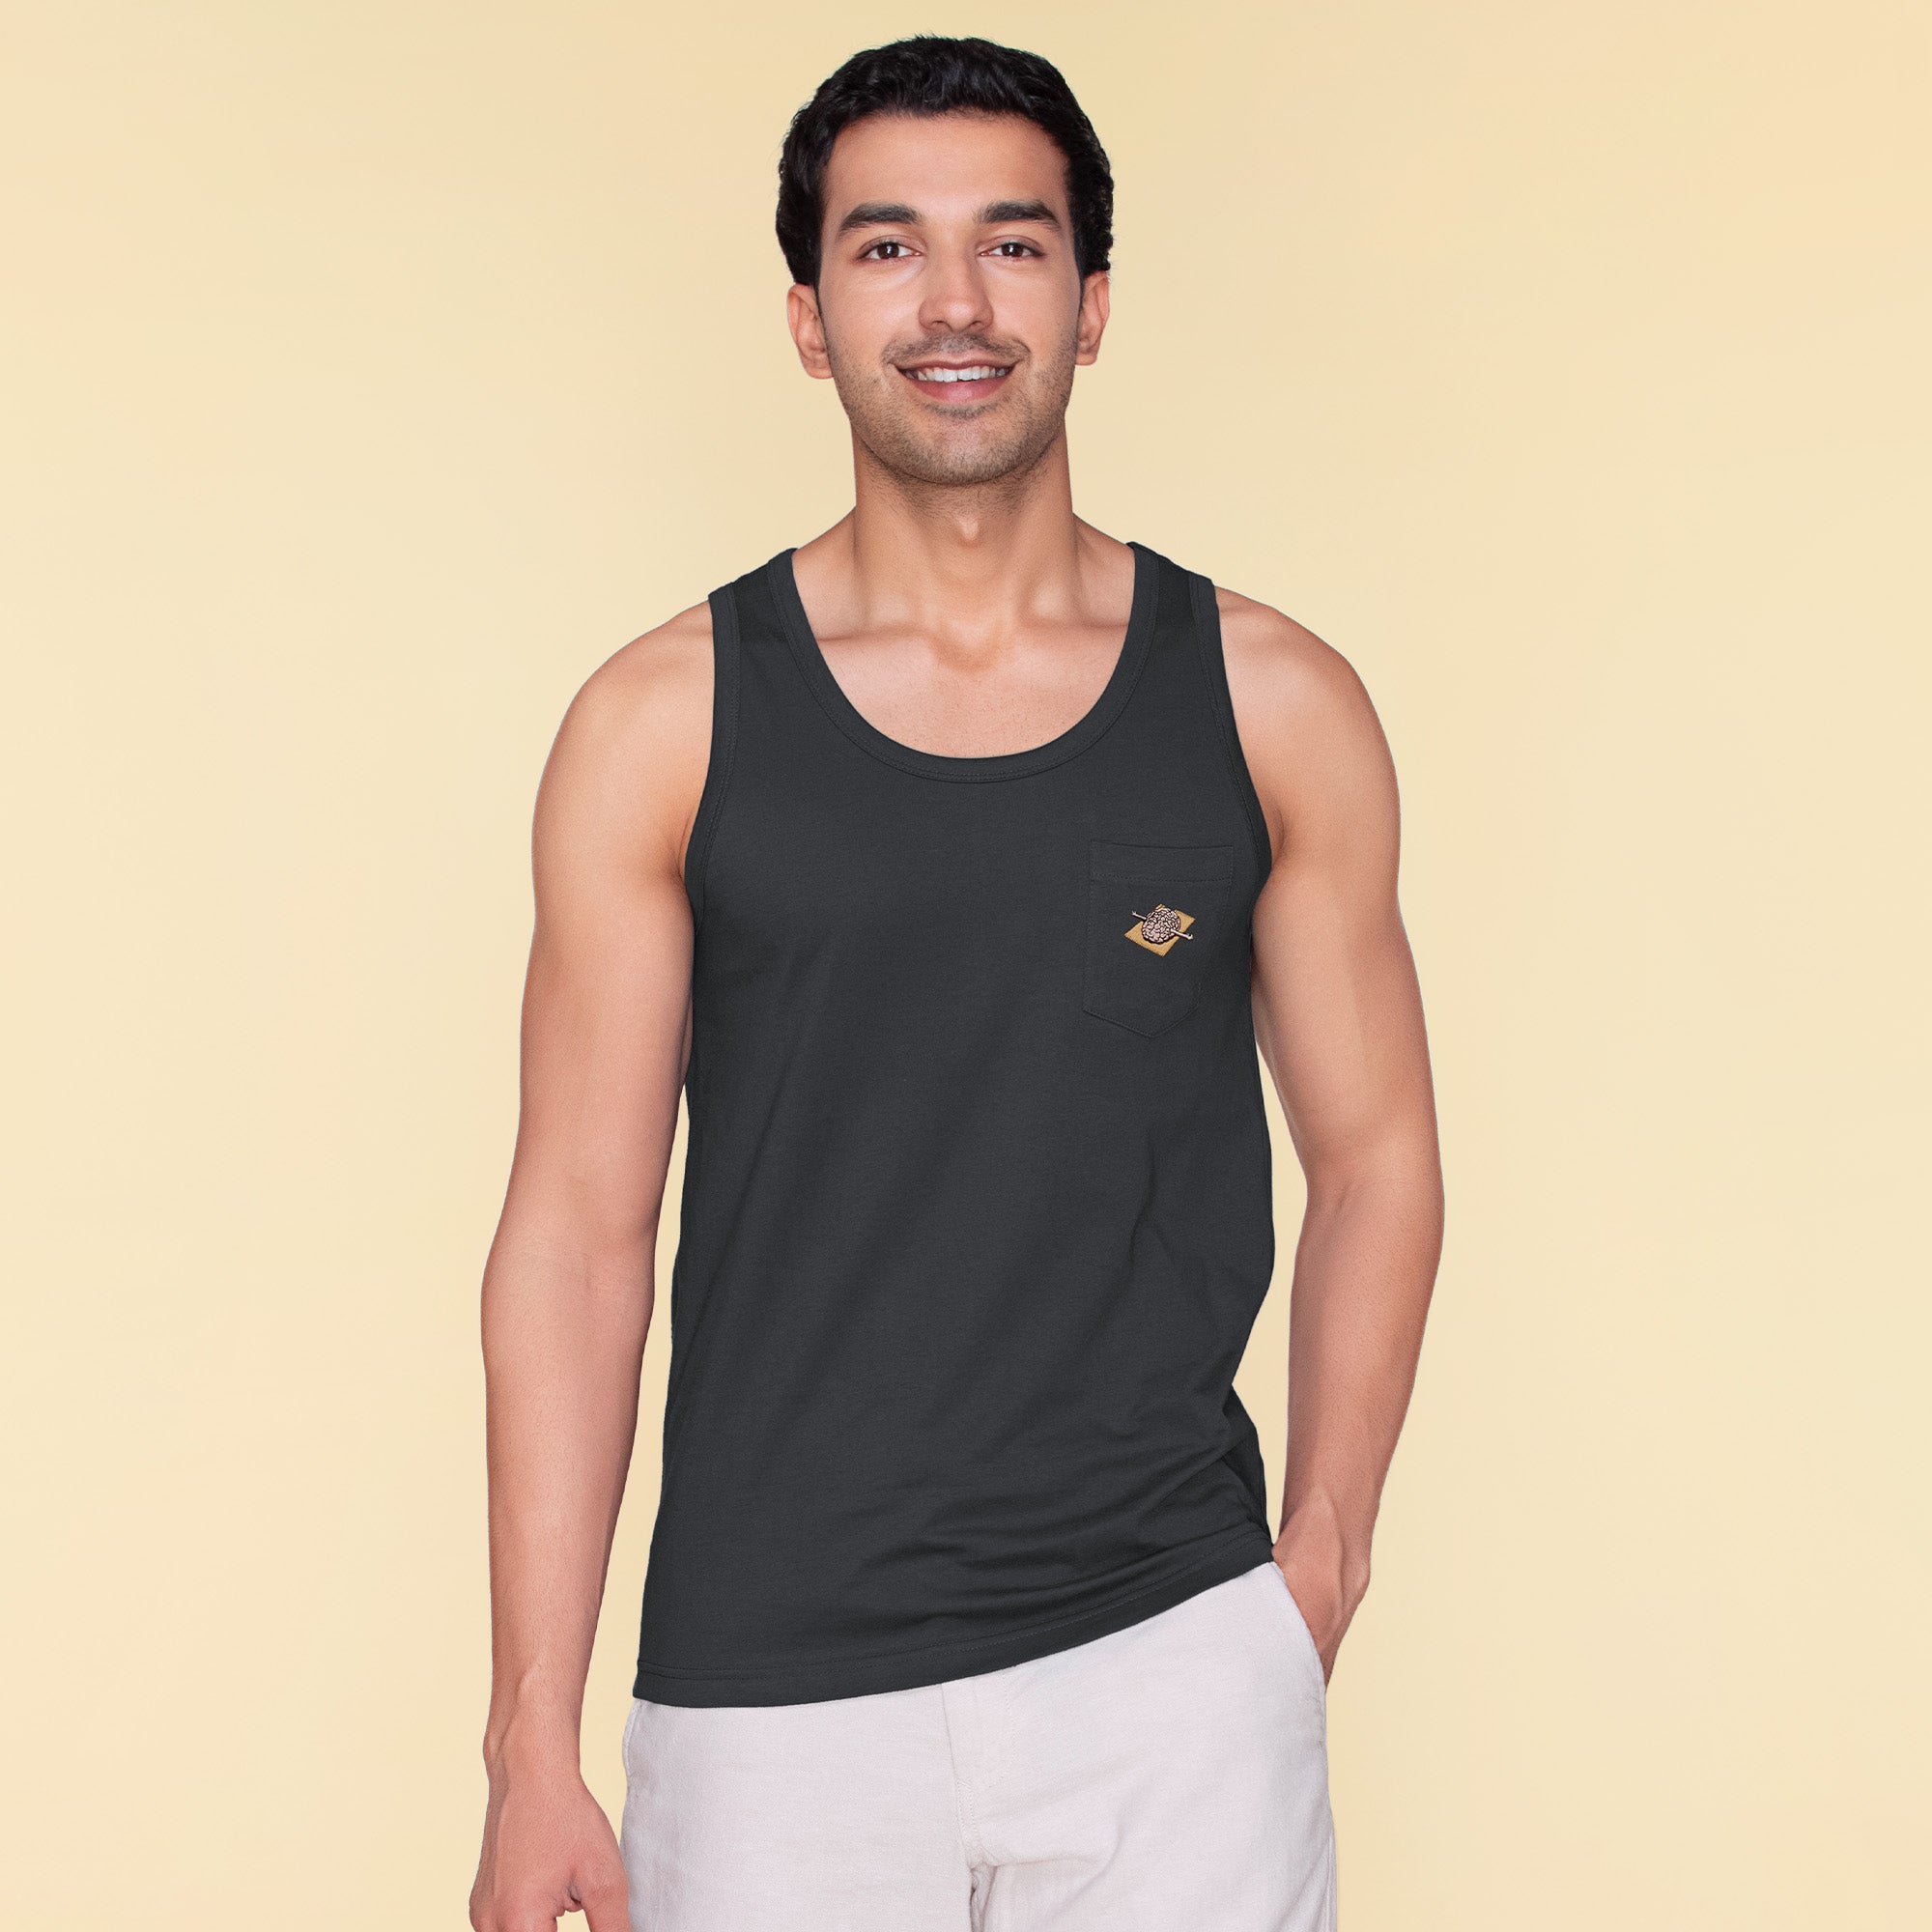 Men's Tank Tops - Buy Men's Tank T-Shirts For Gym Online in India